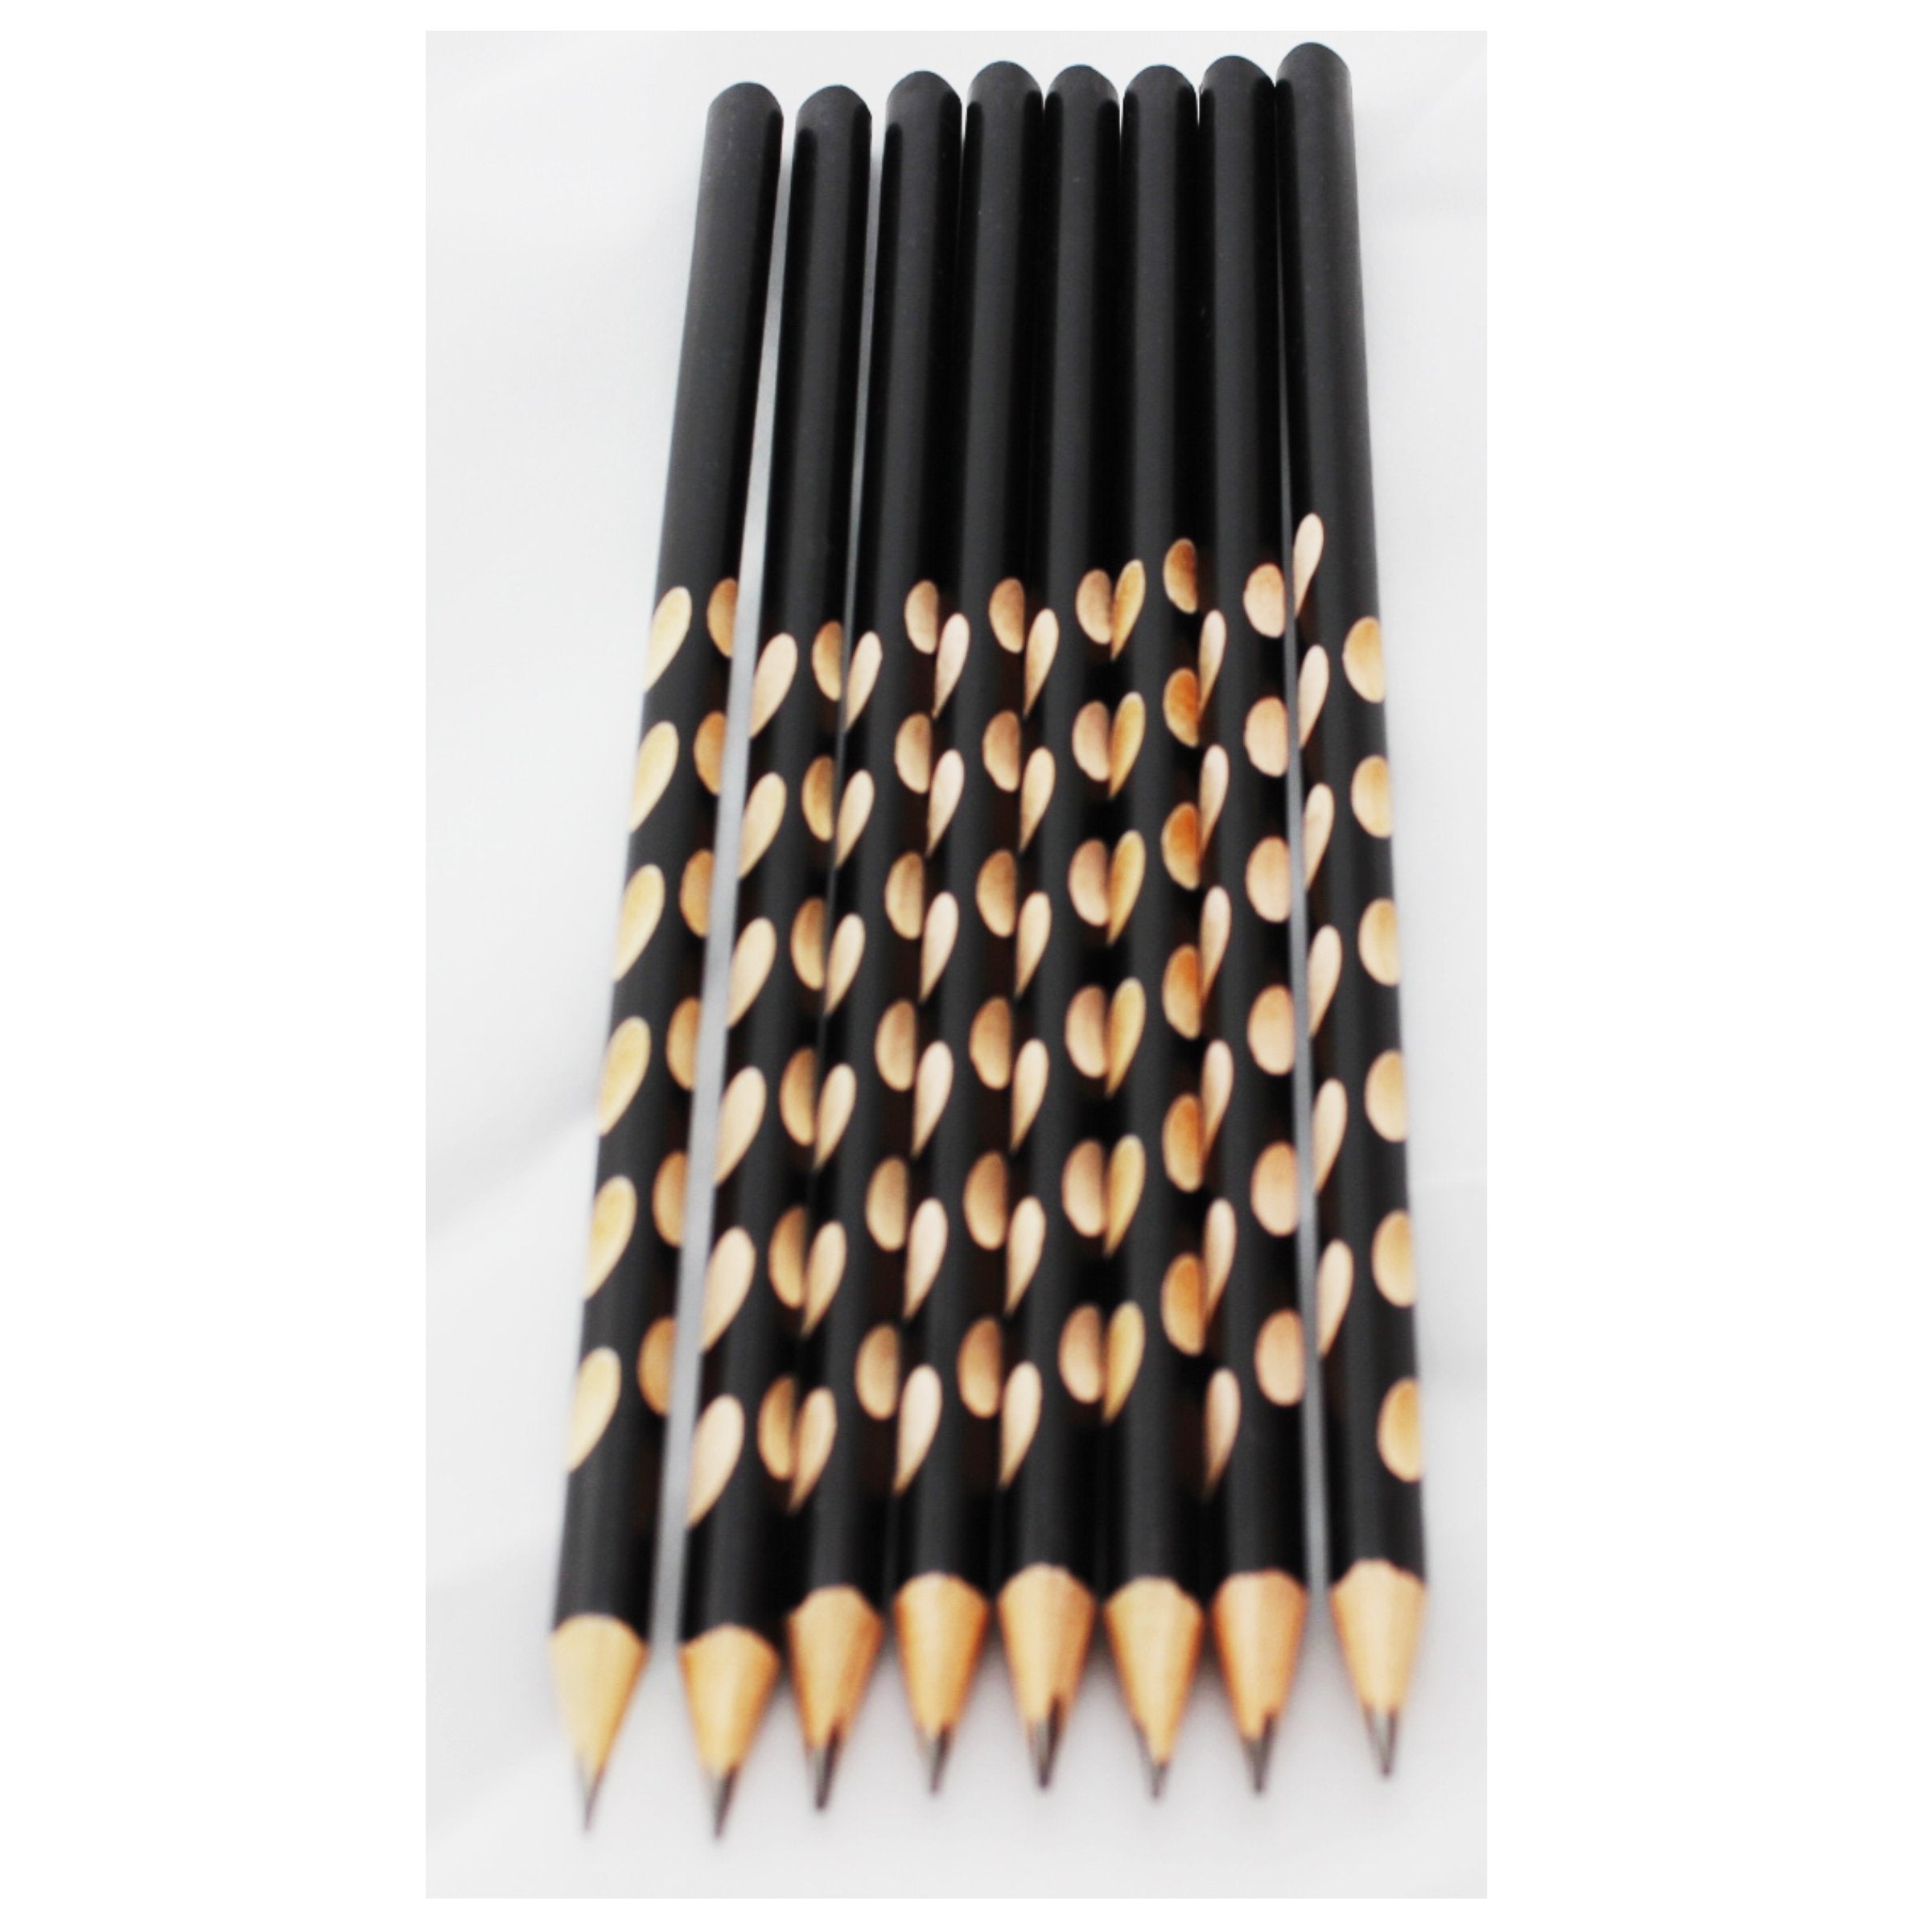 Groove Pencils Black Buy 100, 200, 500 or 1000 units